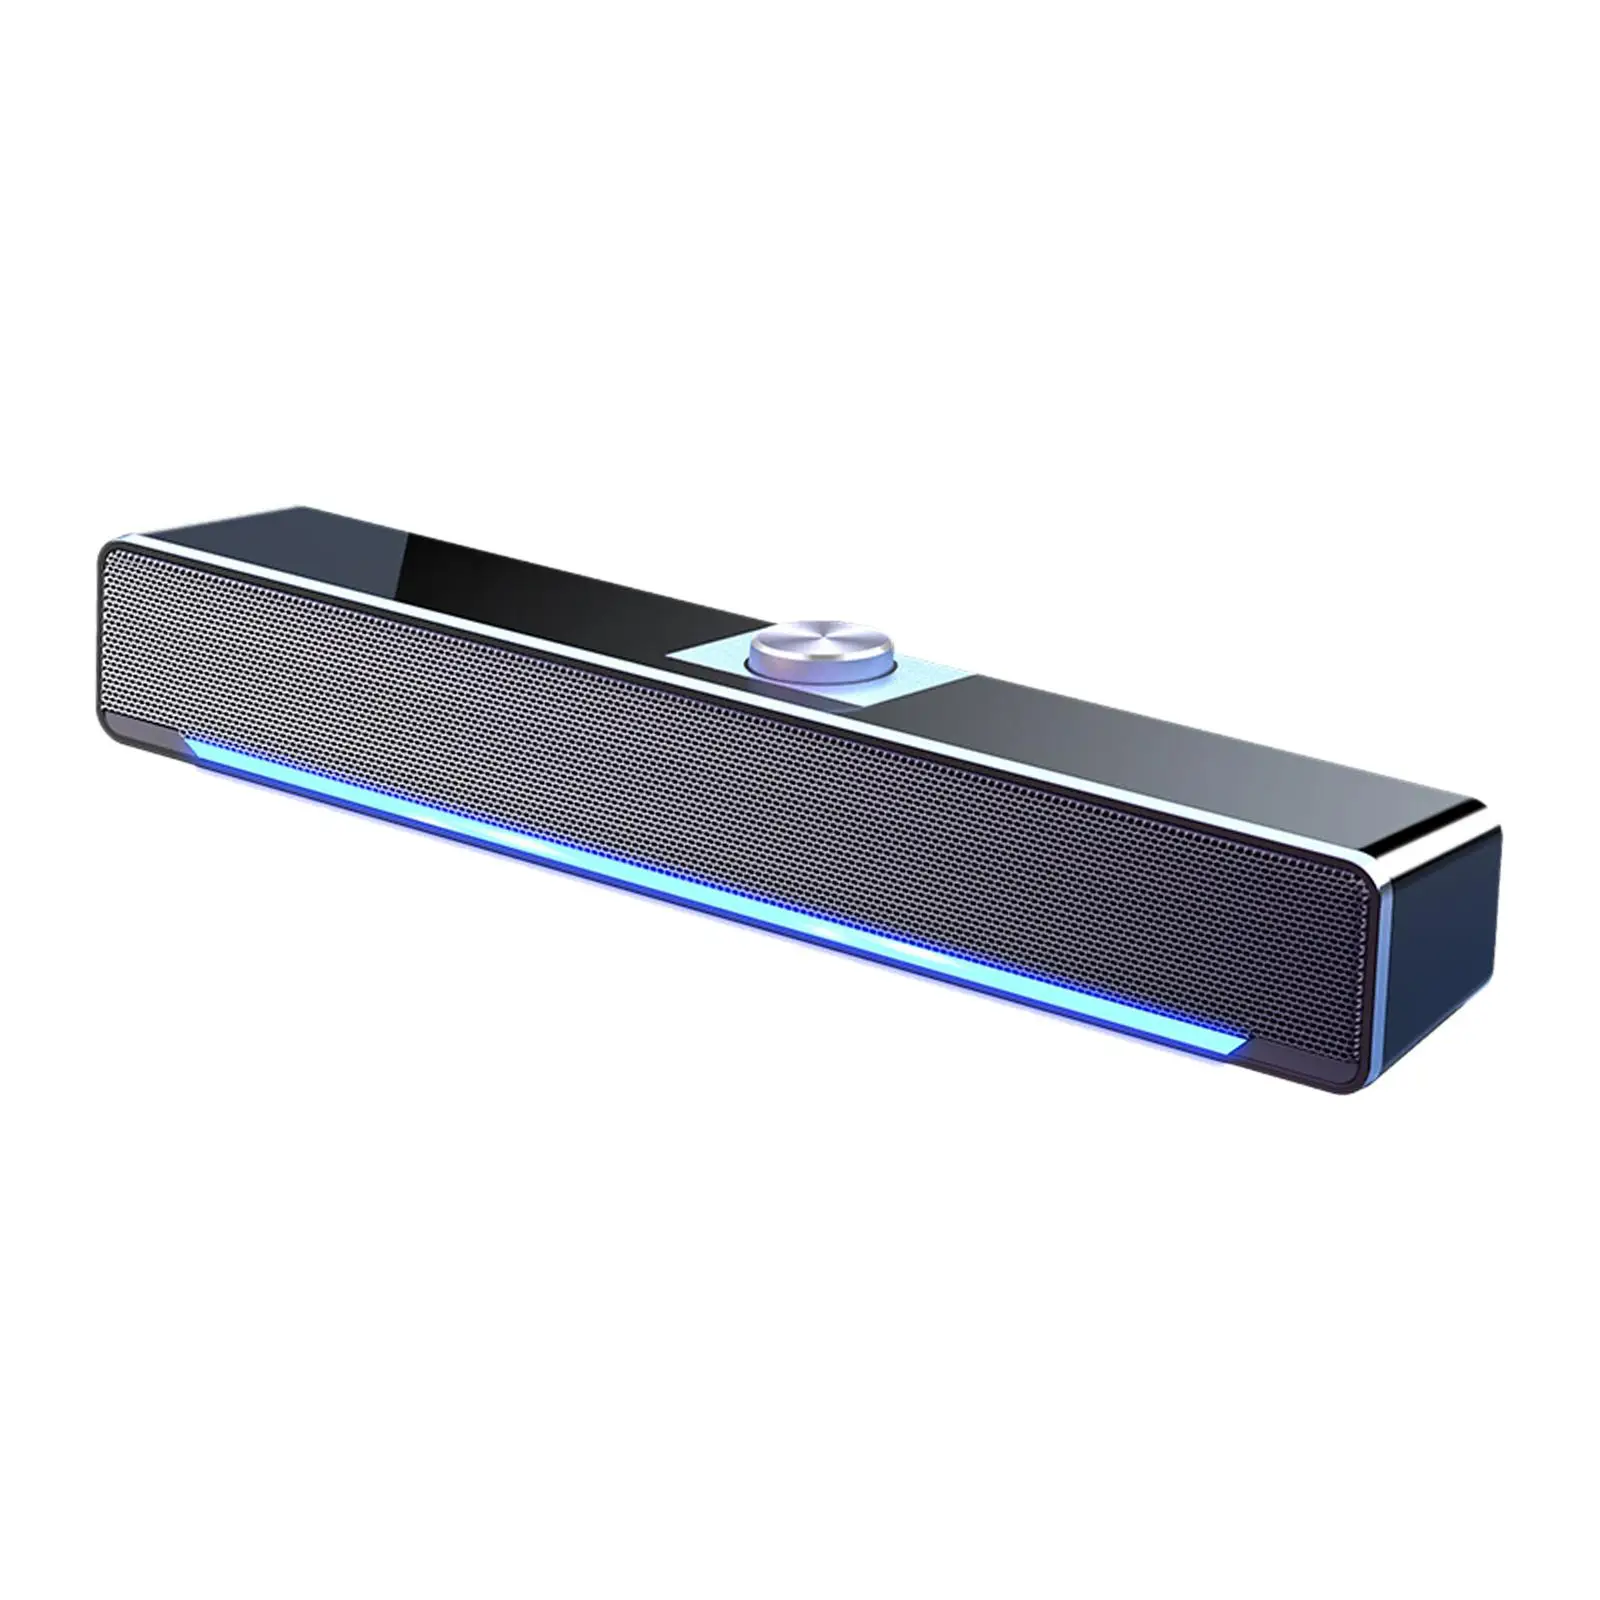 Computer Speaker Wired USB Powered Volume Control Stereo Sound HiFi Sound Quality Loud Volume 3W Enhanced Bass Laptop Speaker